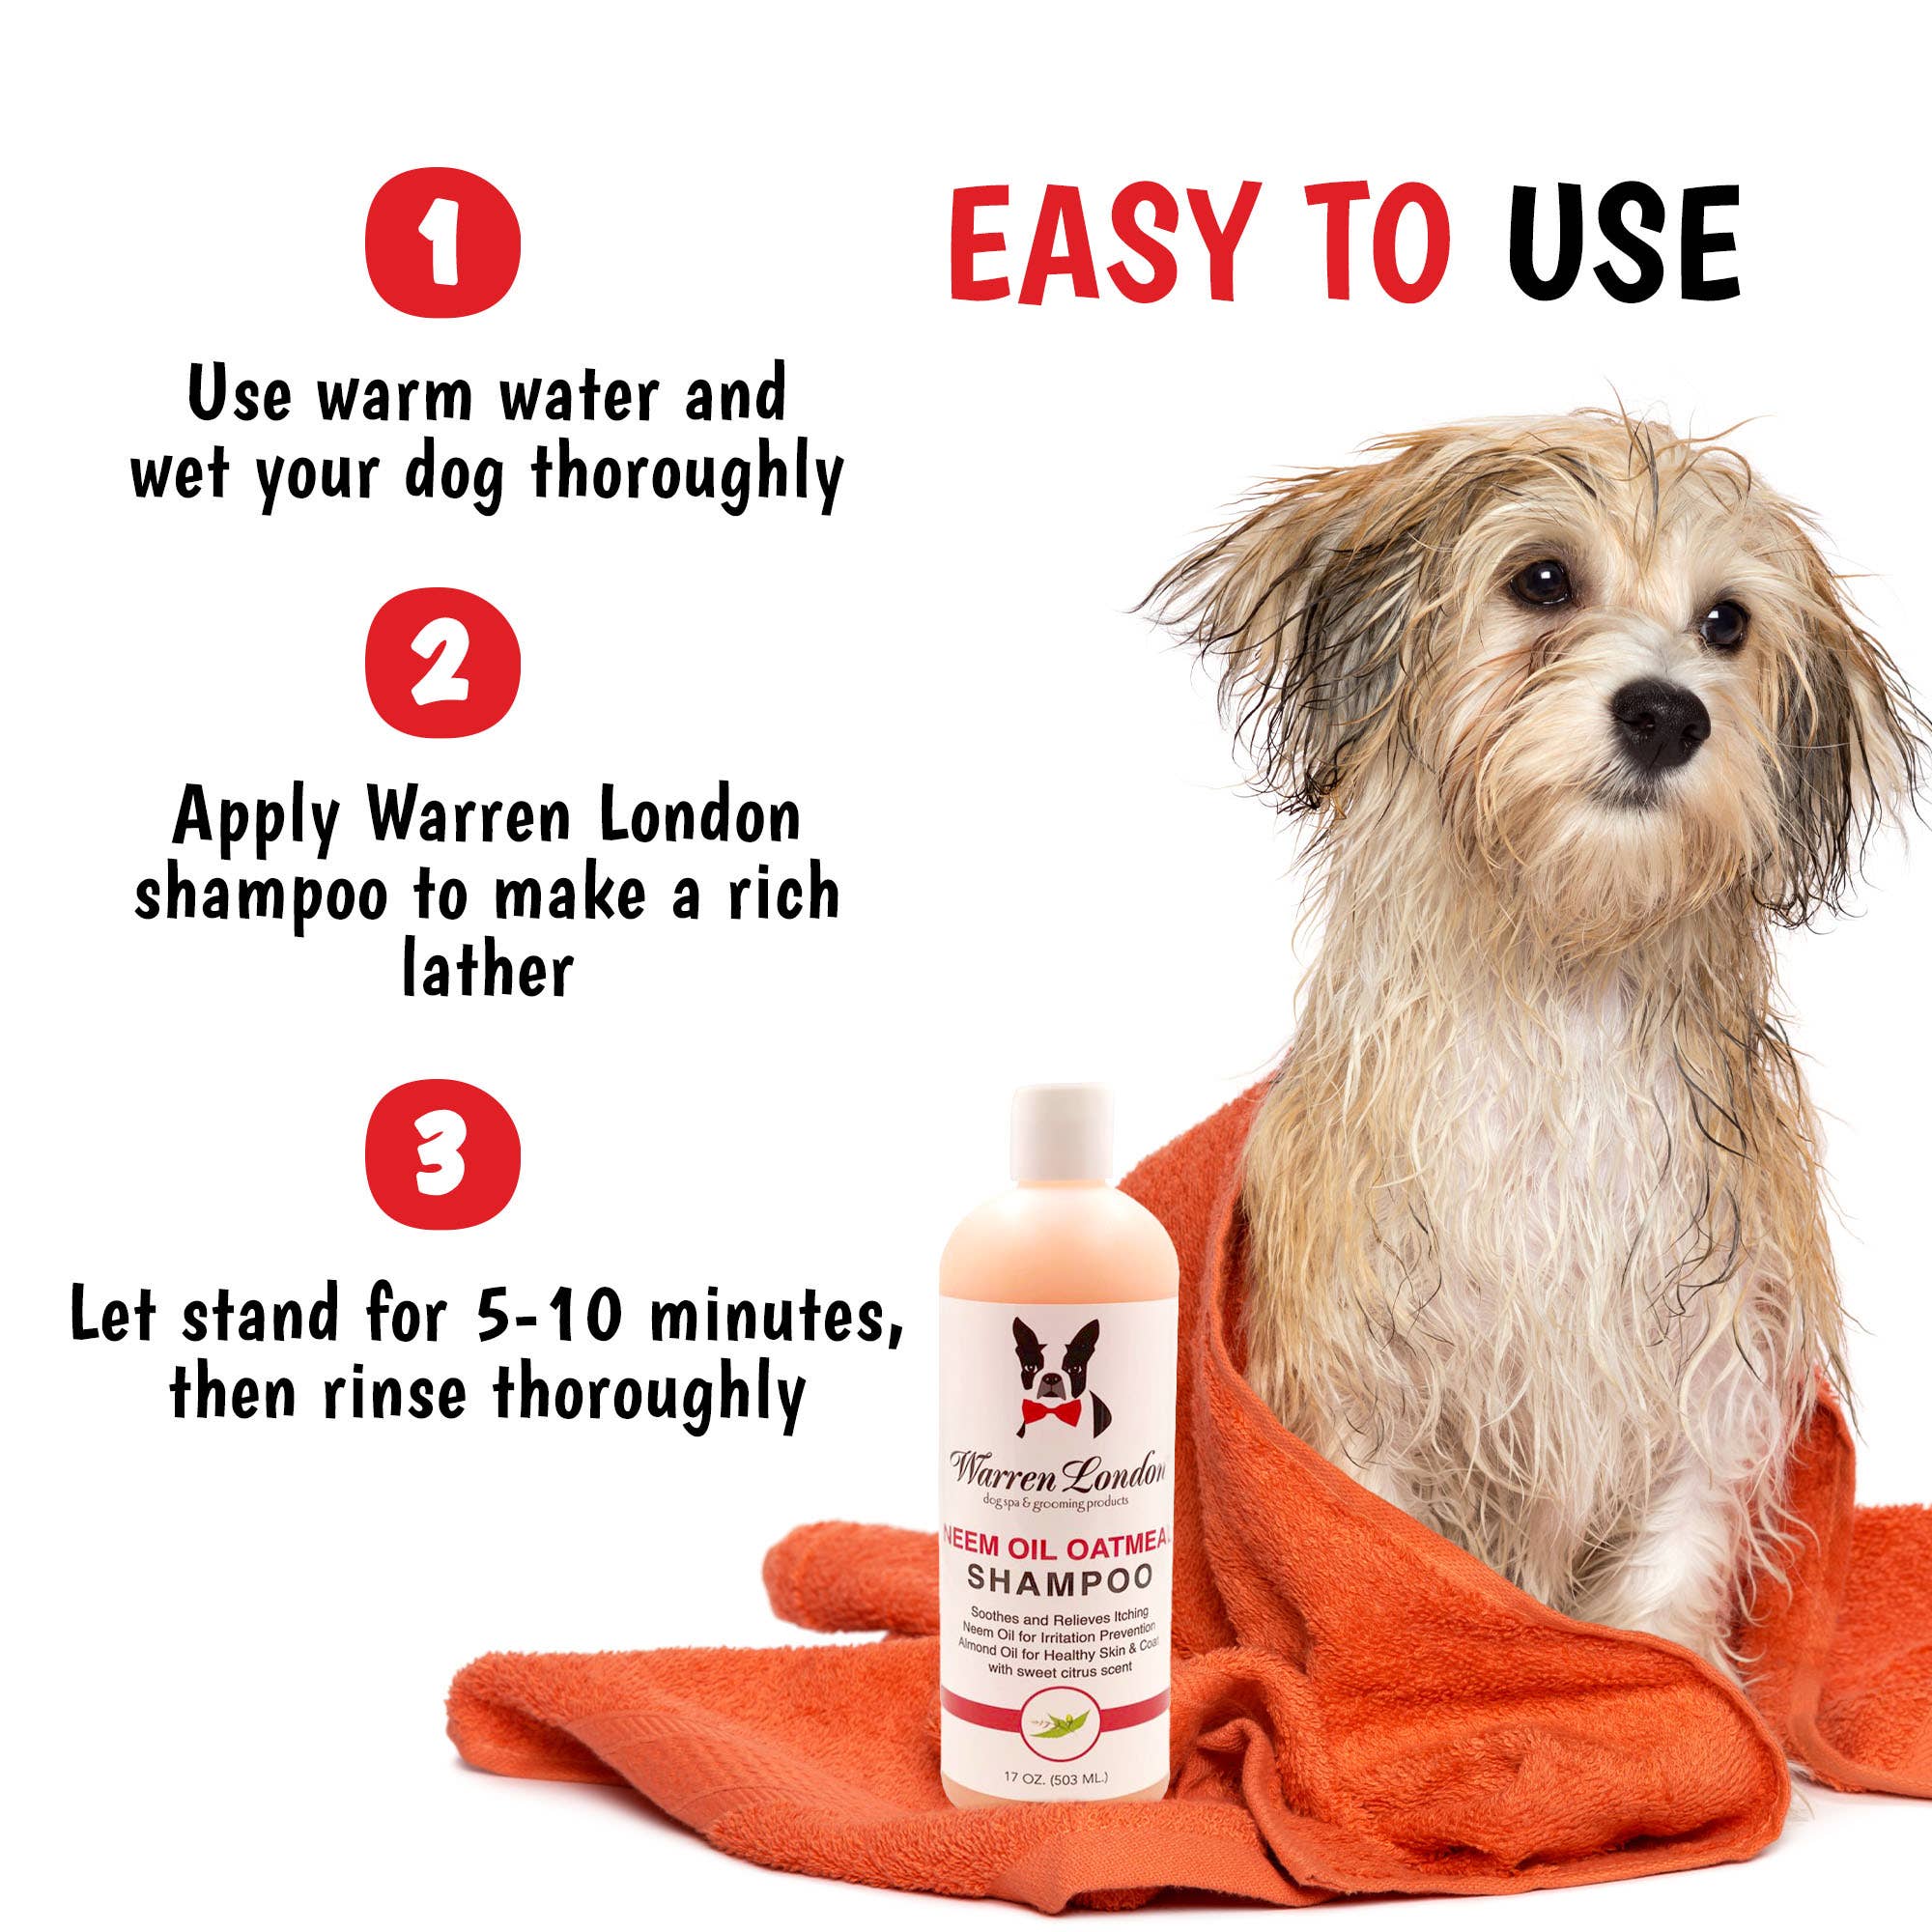 Warren London Dog Products - Shampoo: Neem Oil - 2 Sizes